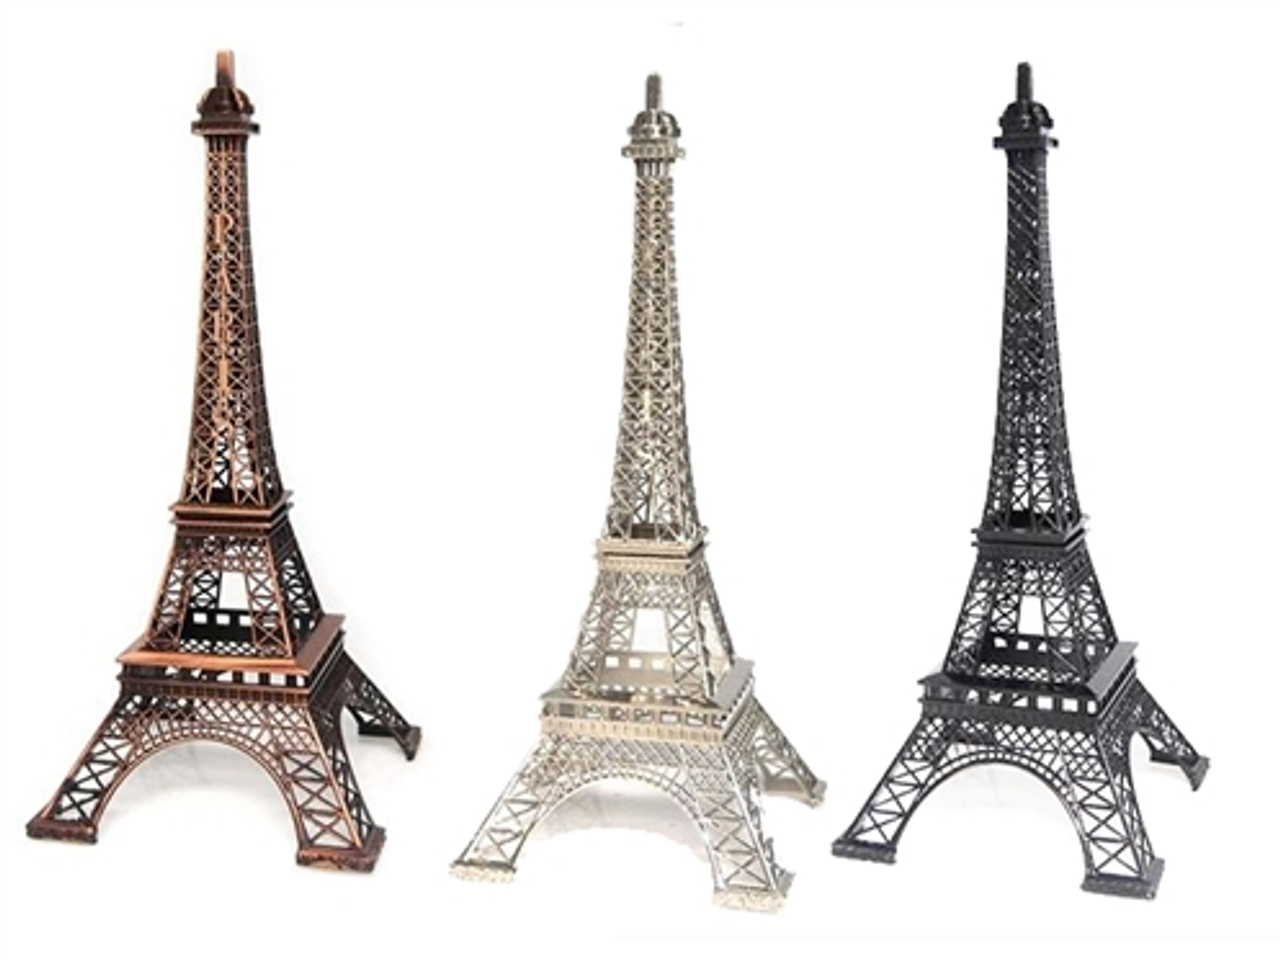 Eiffel Tower replicas around the world